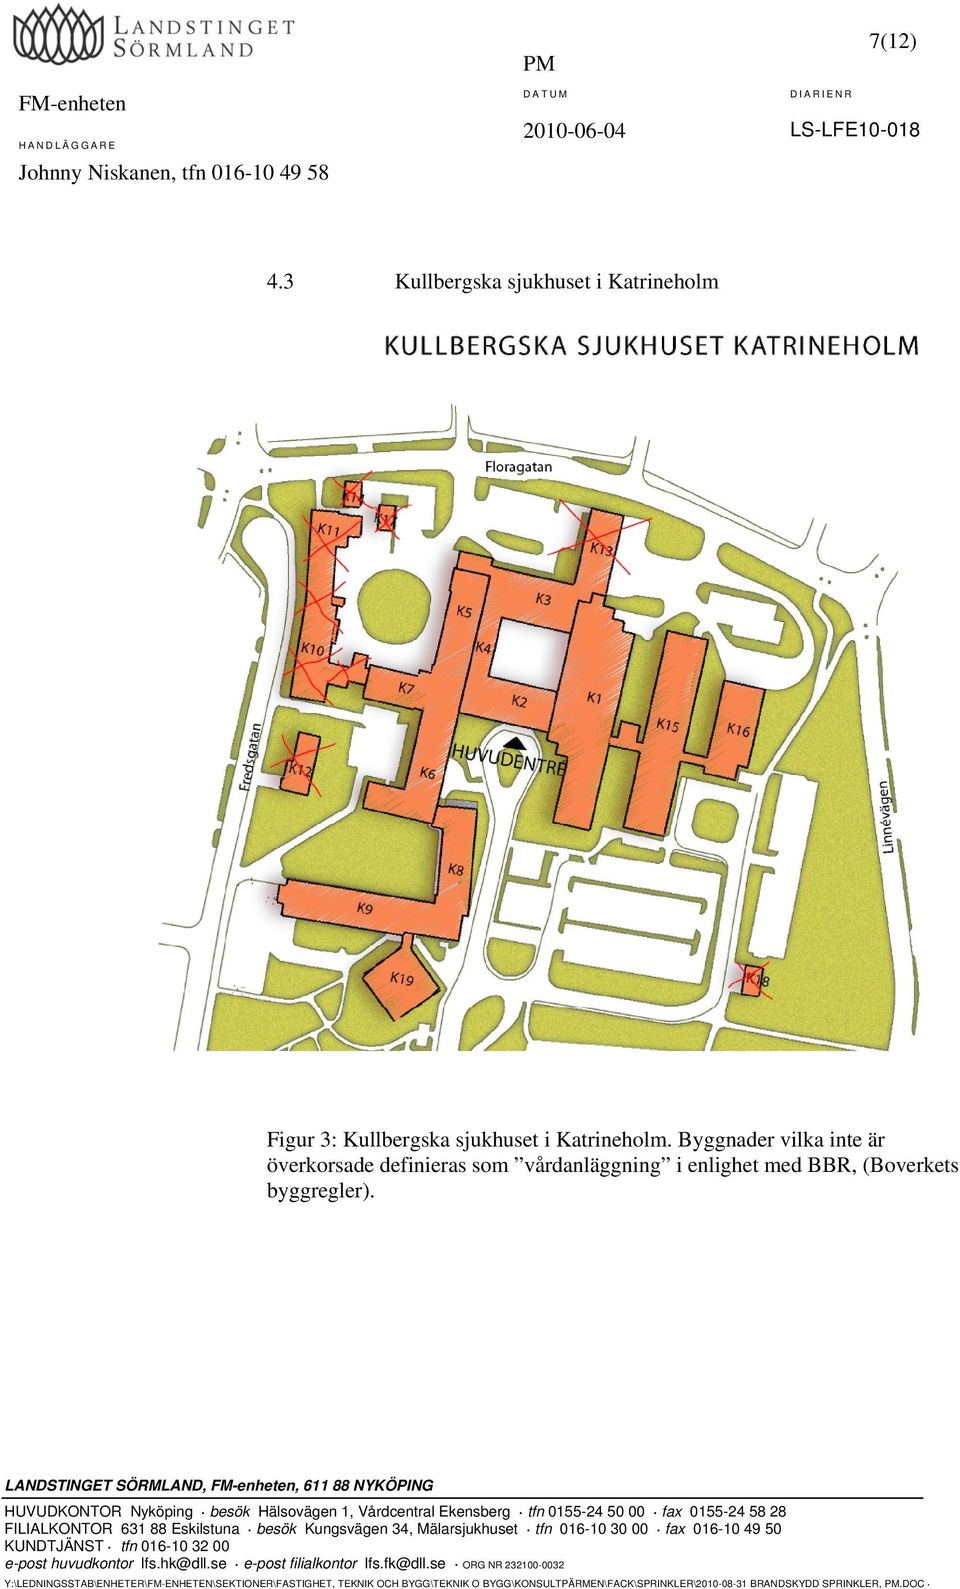 Kullbergska sjukhuset i Katrineholm.